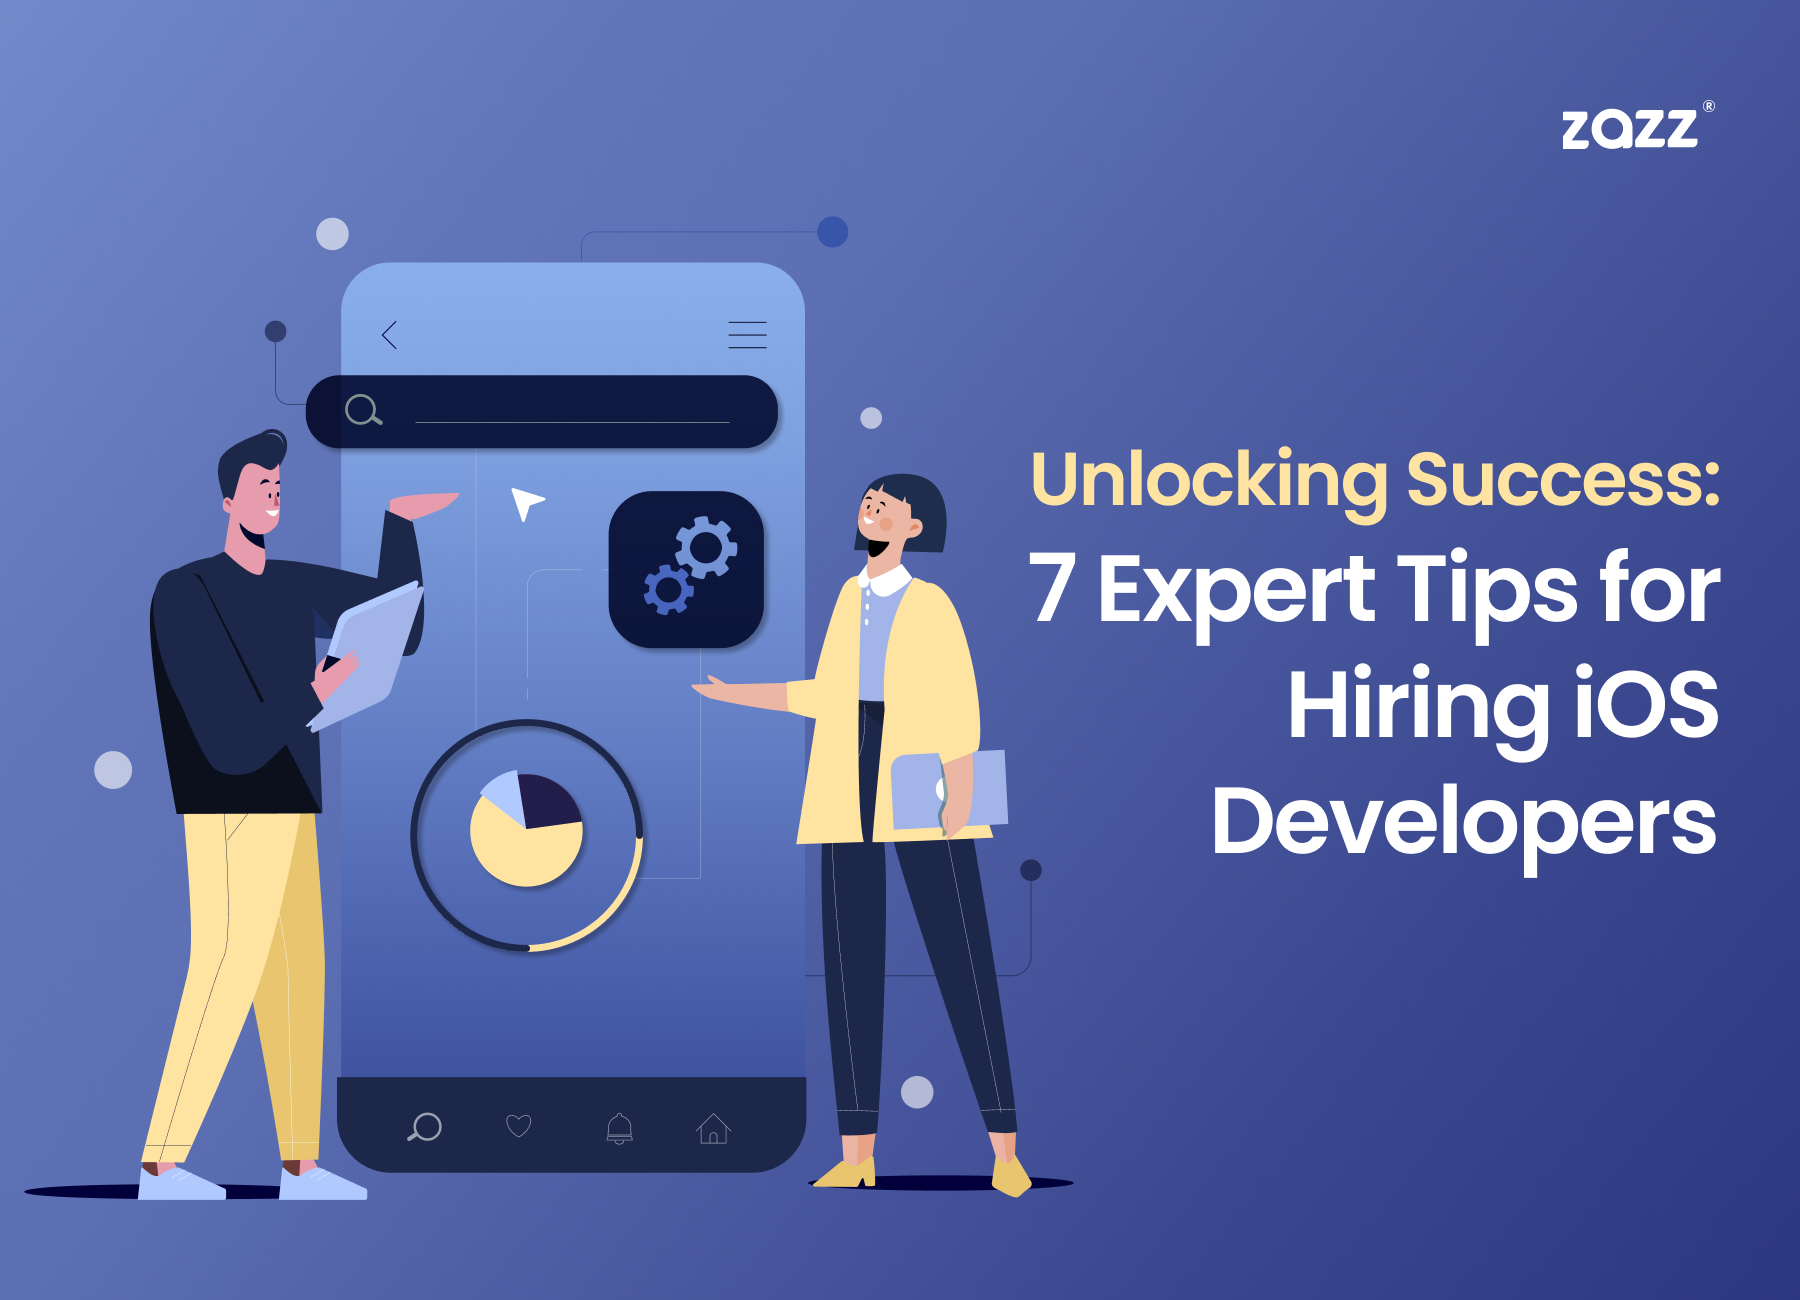 Unlocking Success: 7 Expert Tips for Hiring iOS Developers